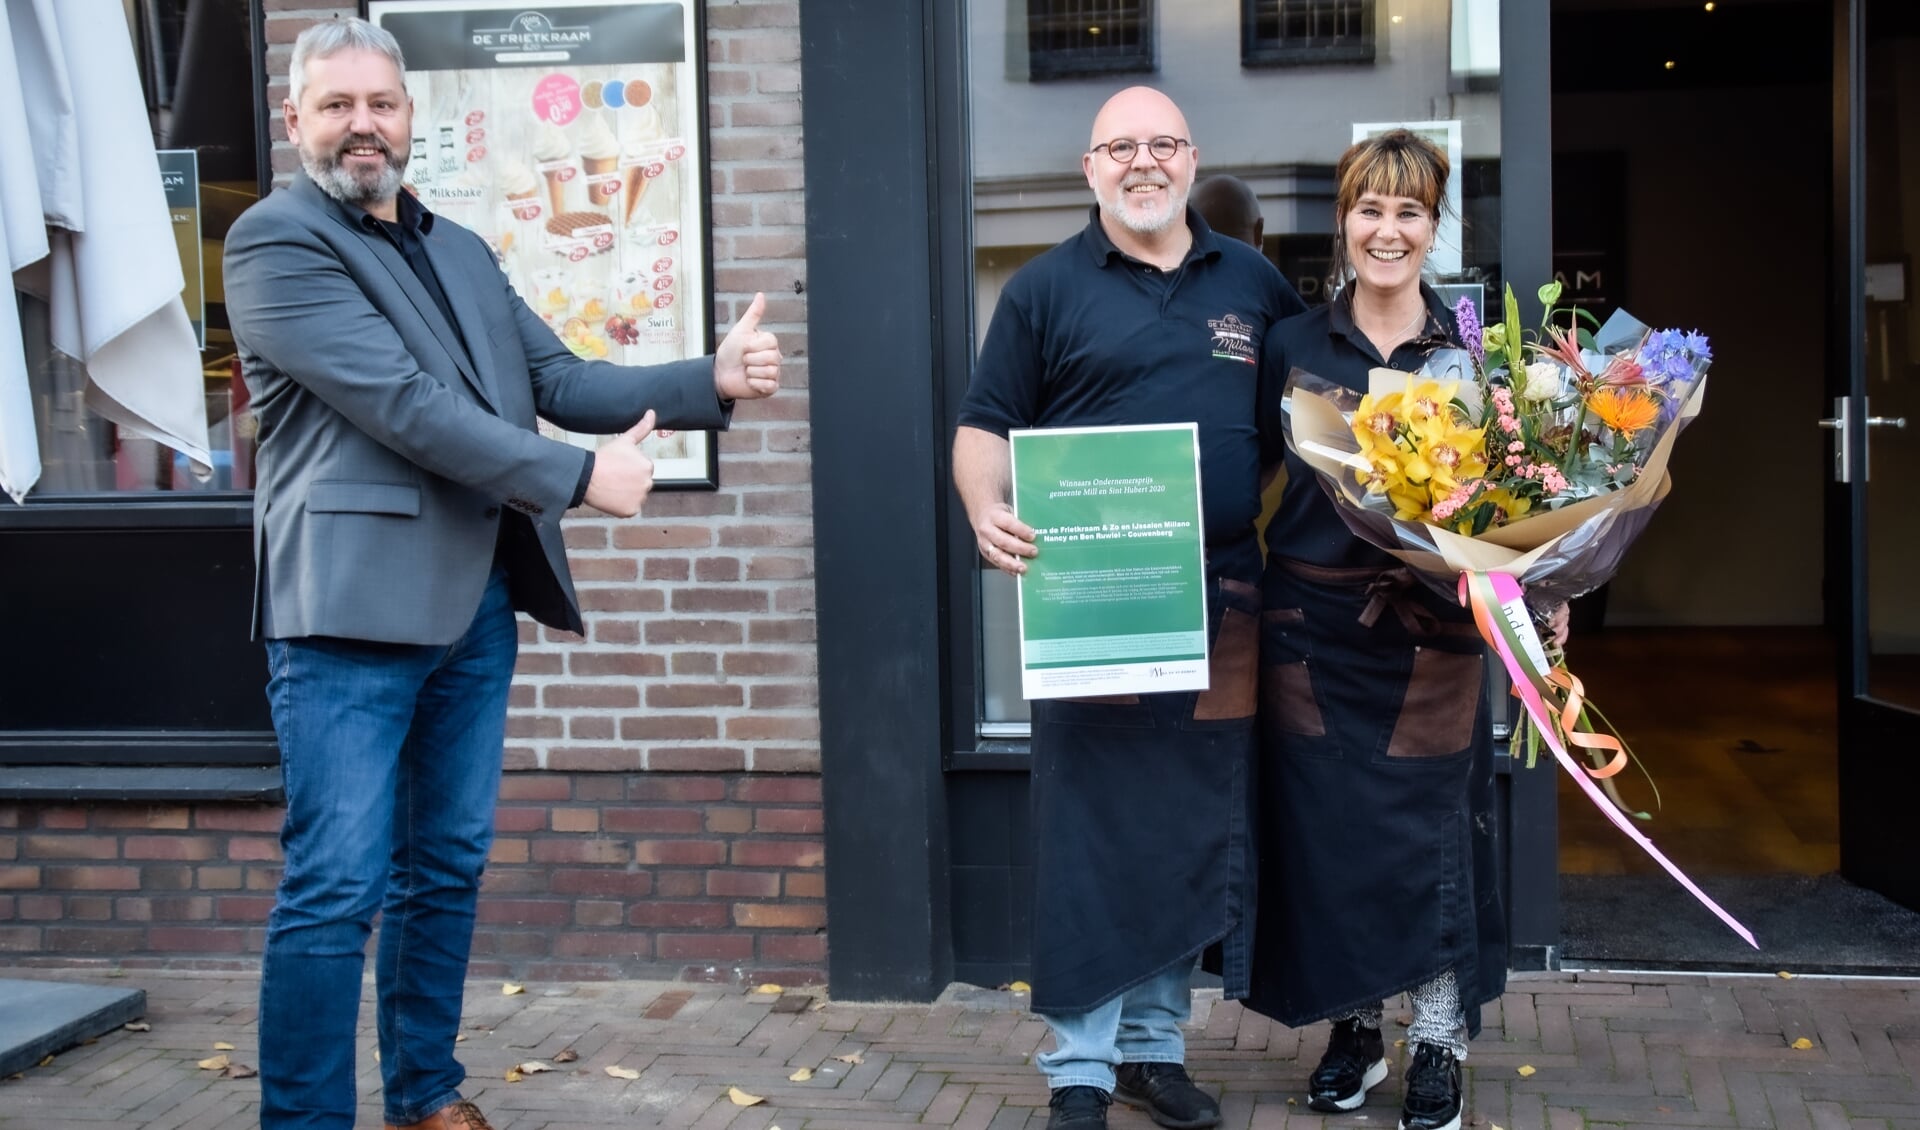 Nancy en Ben Ruwiel – Couwenberg winnen Ondernemersprijs gemeente Mill en Sint Hubert 2020